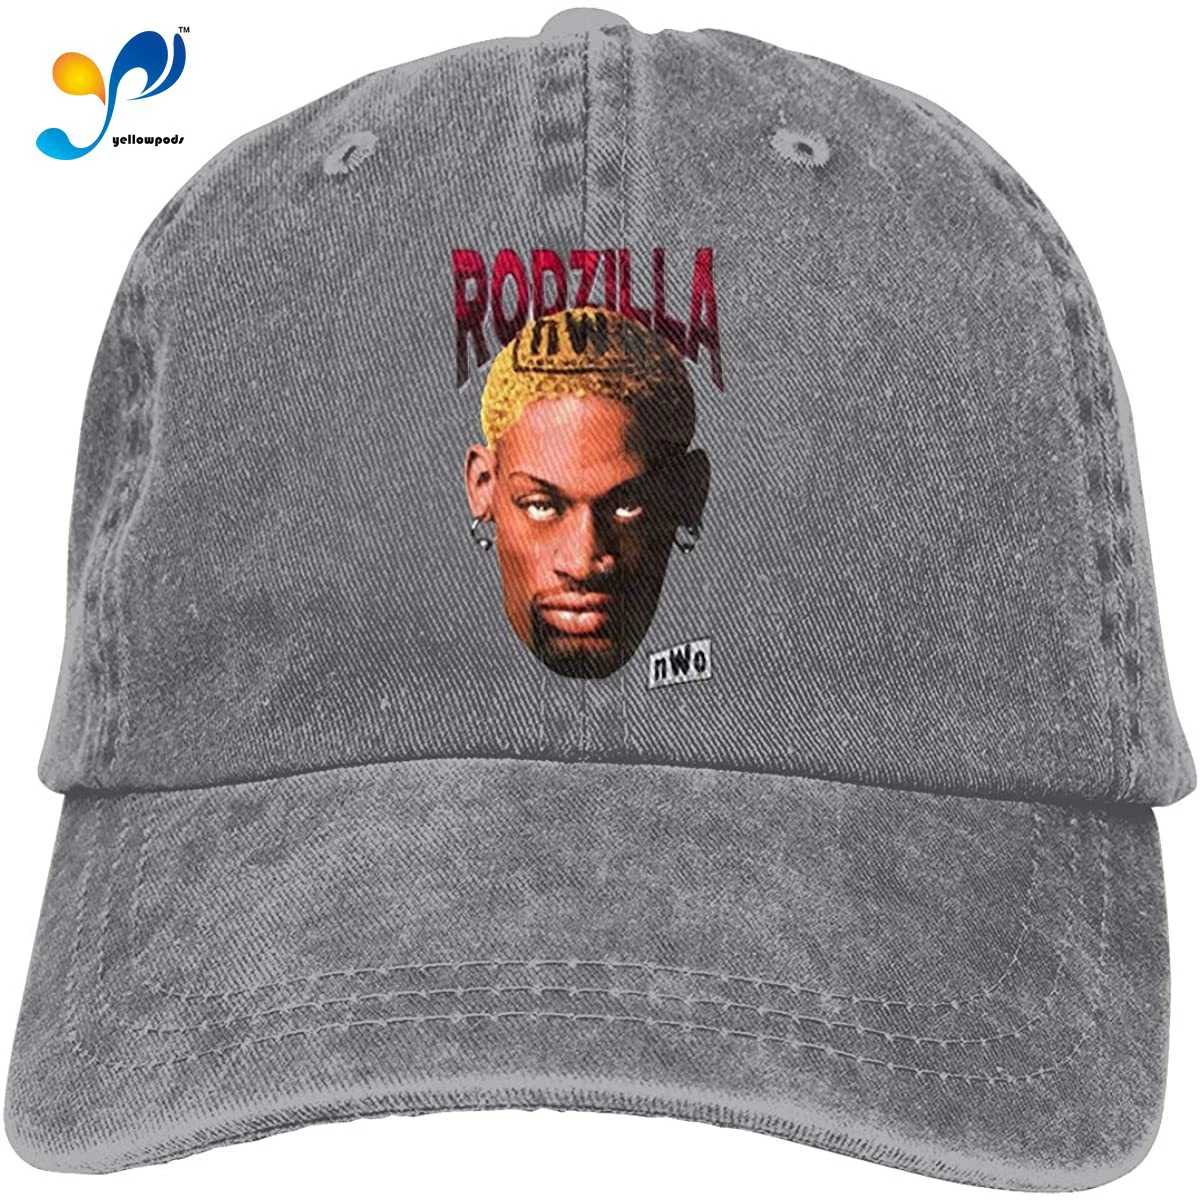 

Dennis Rodman Rodzilla WCW Wrestling Unisex Music Cowboy Hat Adjustable Casquette Cap Black